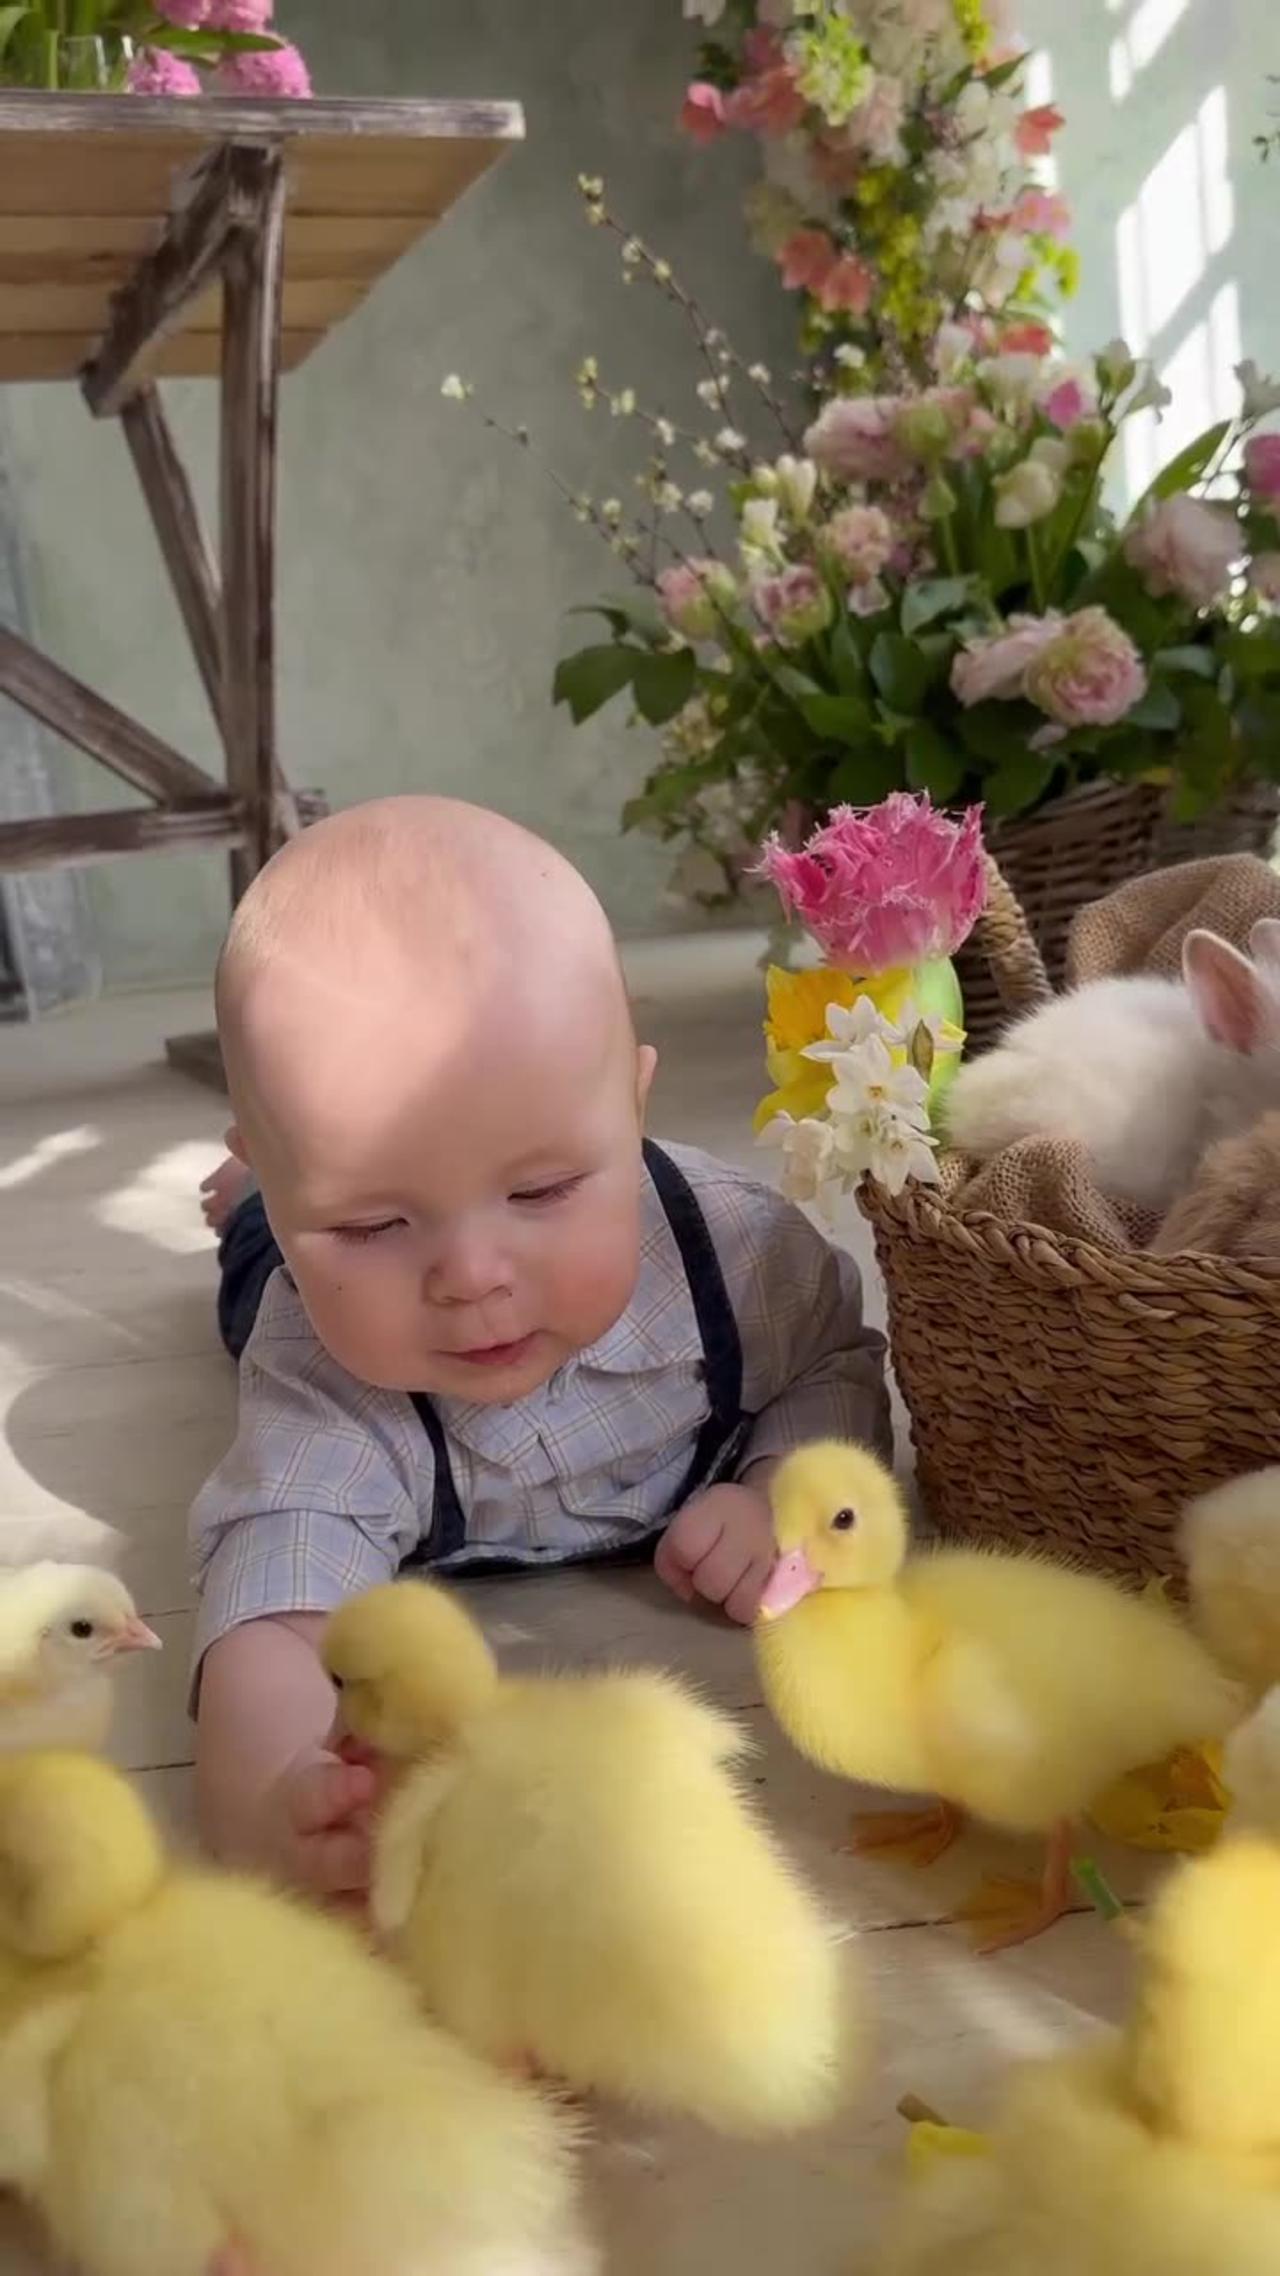 Cute Baby with cute ducks